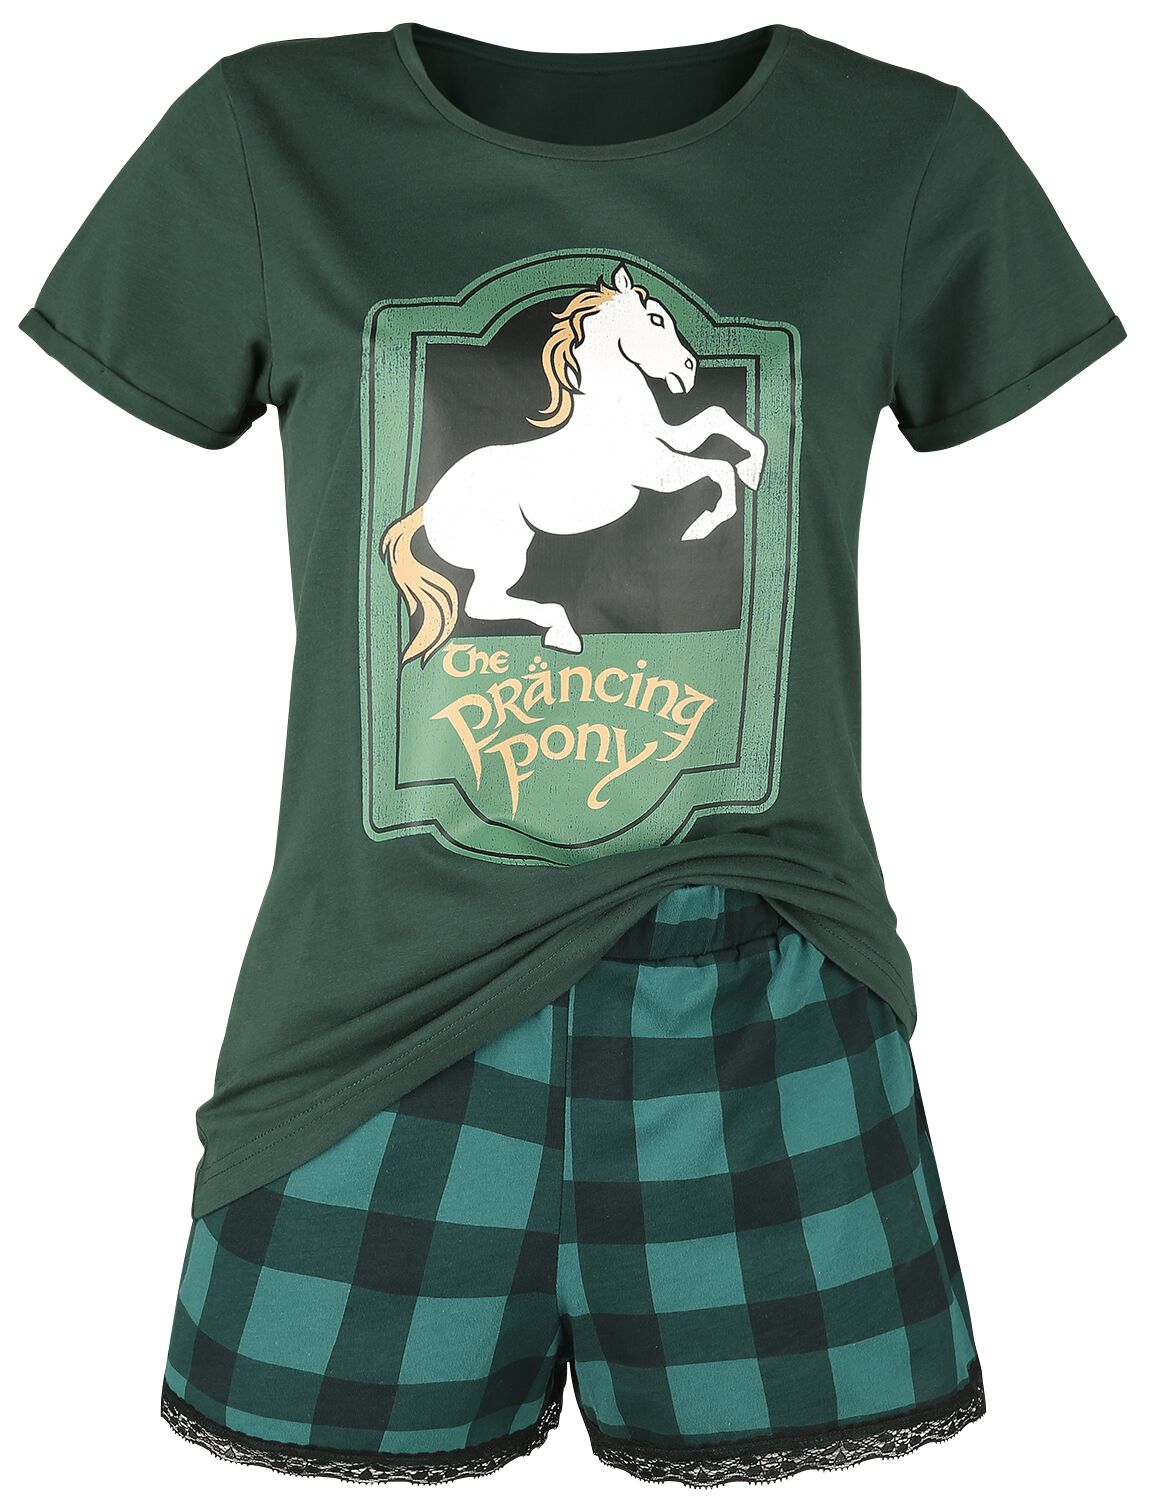 The Lord Of The Rings Prancing Pony Pyjama dark green